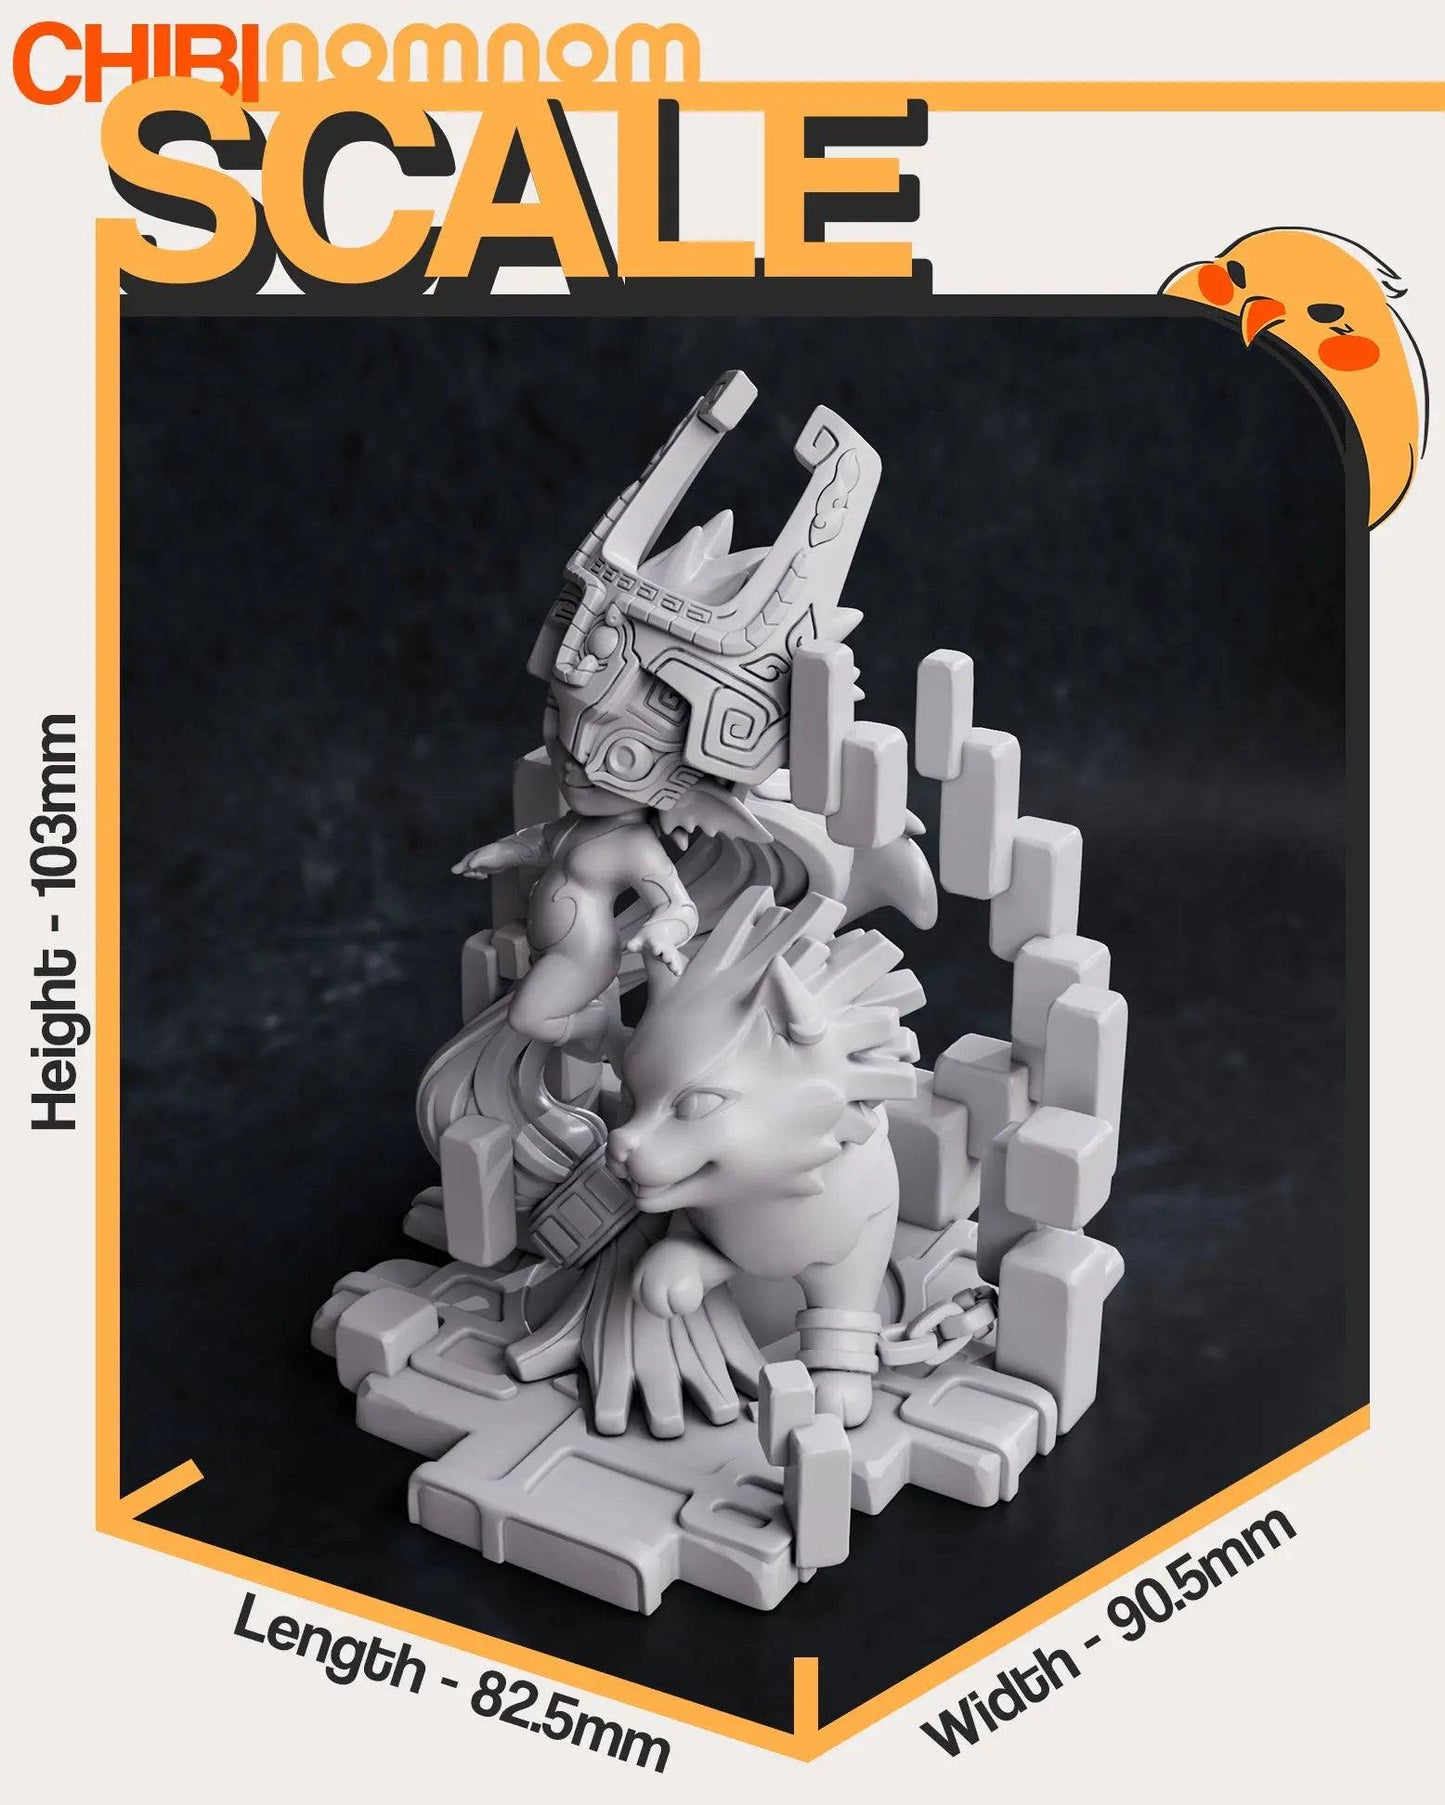 Chibi Twilit Princess and Her Wolf Knight | Resin Garage Kit Sculpture Anime Video Game Fan Art Statue | Nomnom Figures - Tattles Told 3D